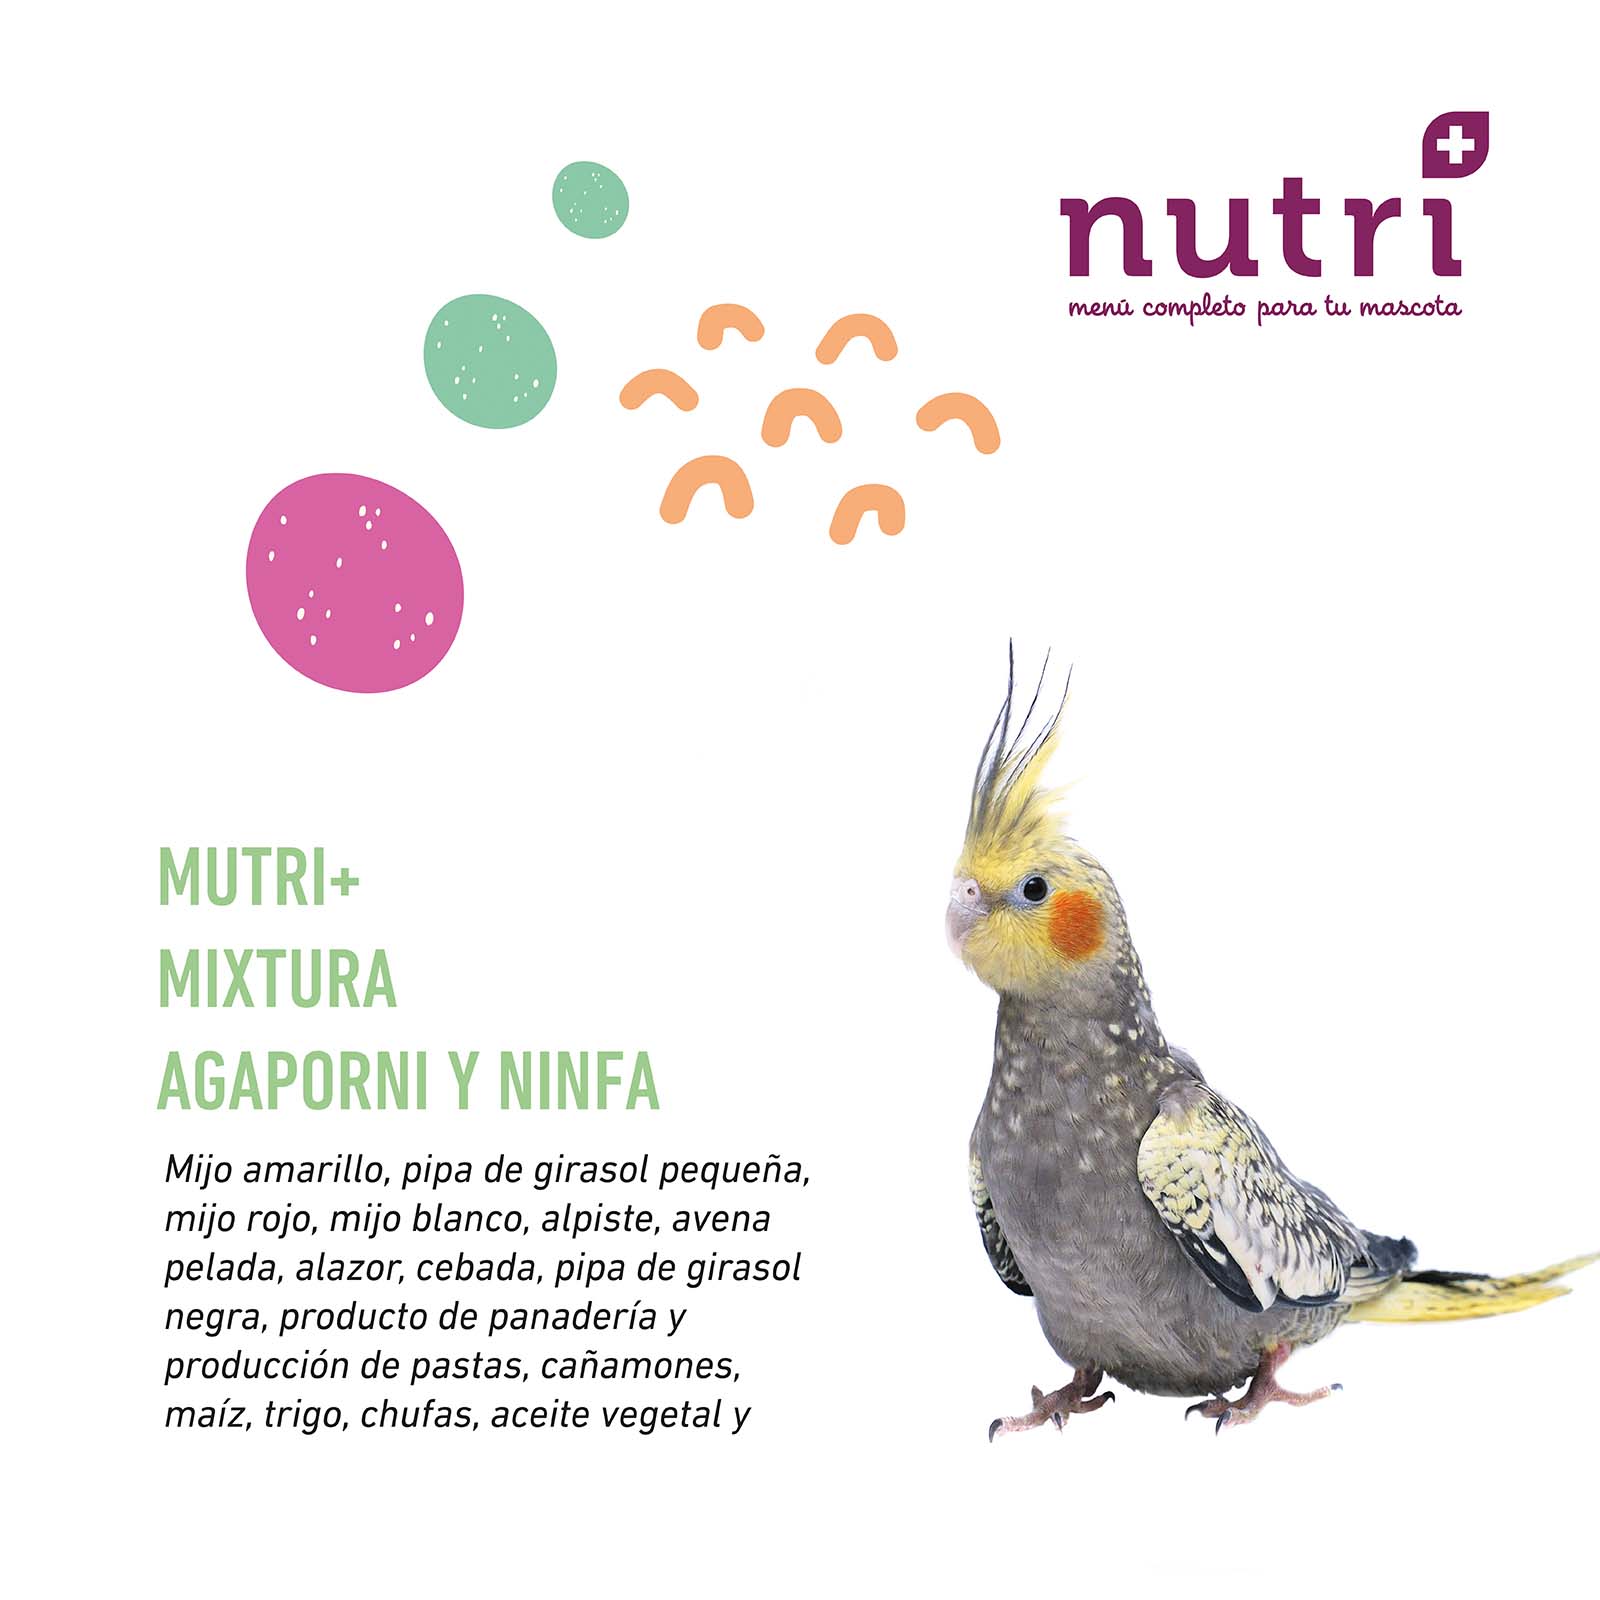 NUTRI+ AVES MIXTURA AGAPORNI Y NINFA